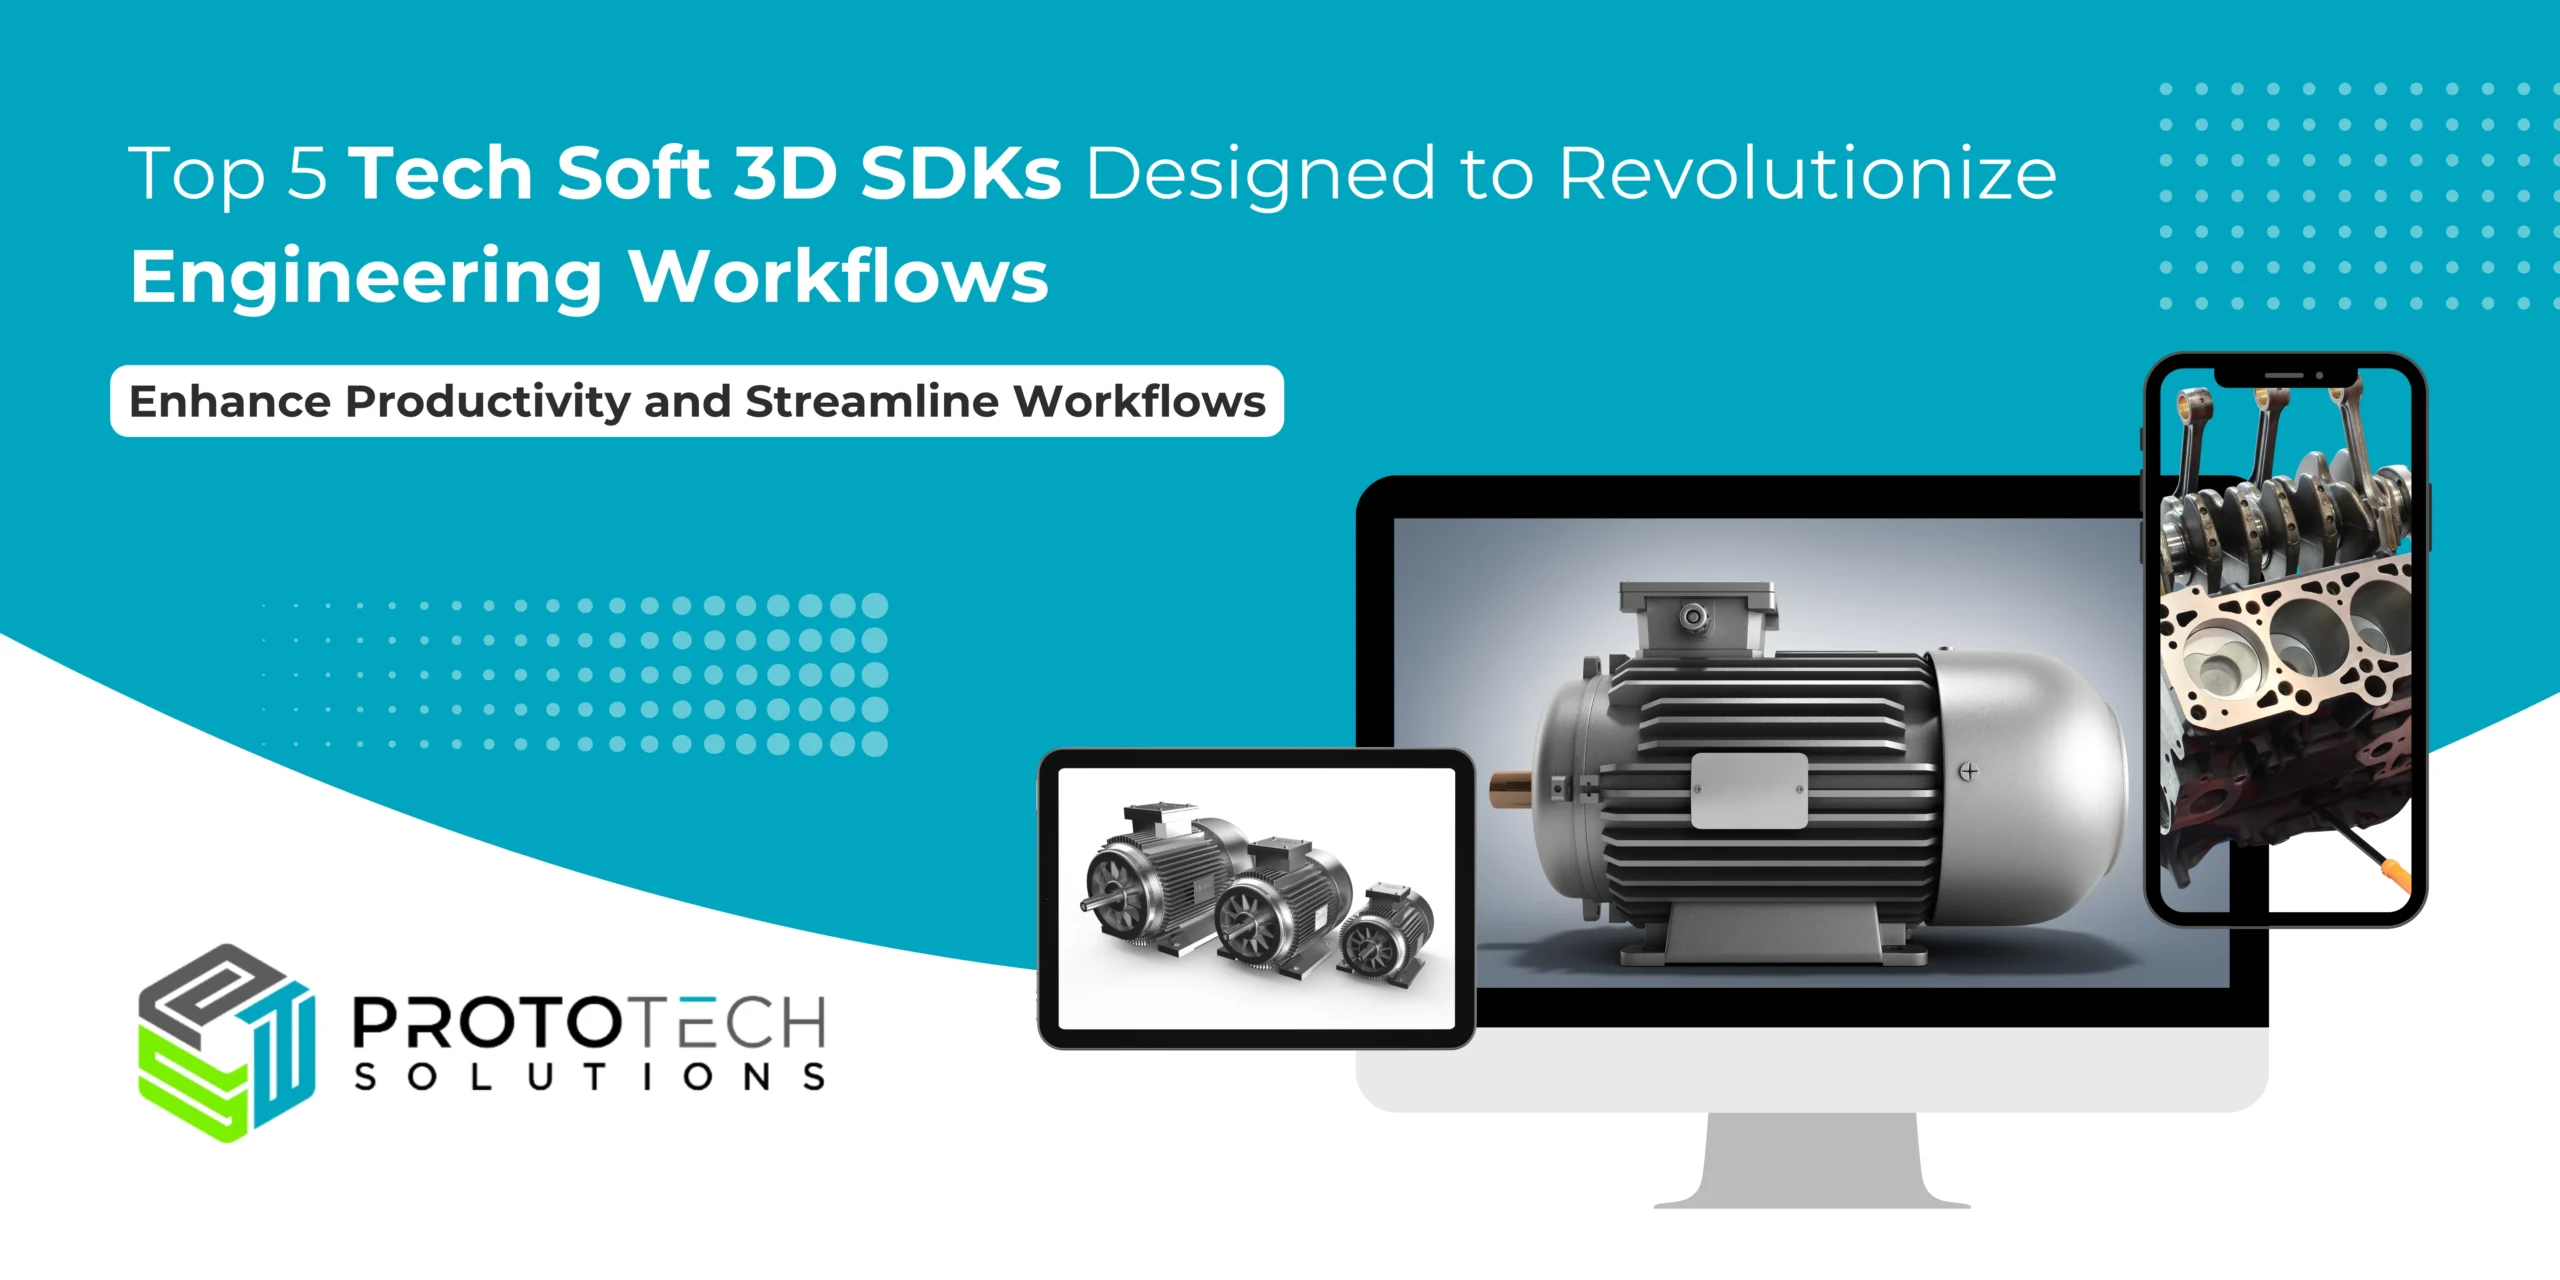 Top 5 Tech Soft 3D SDKs Designed to Revolutionize Engineering Workflows